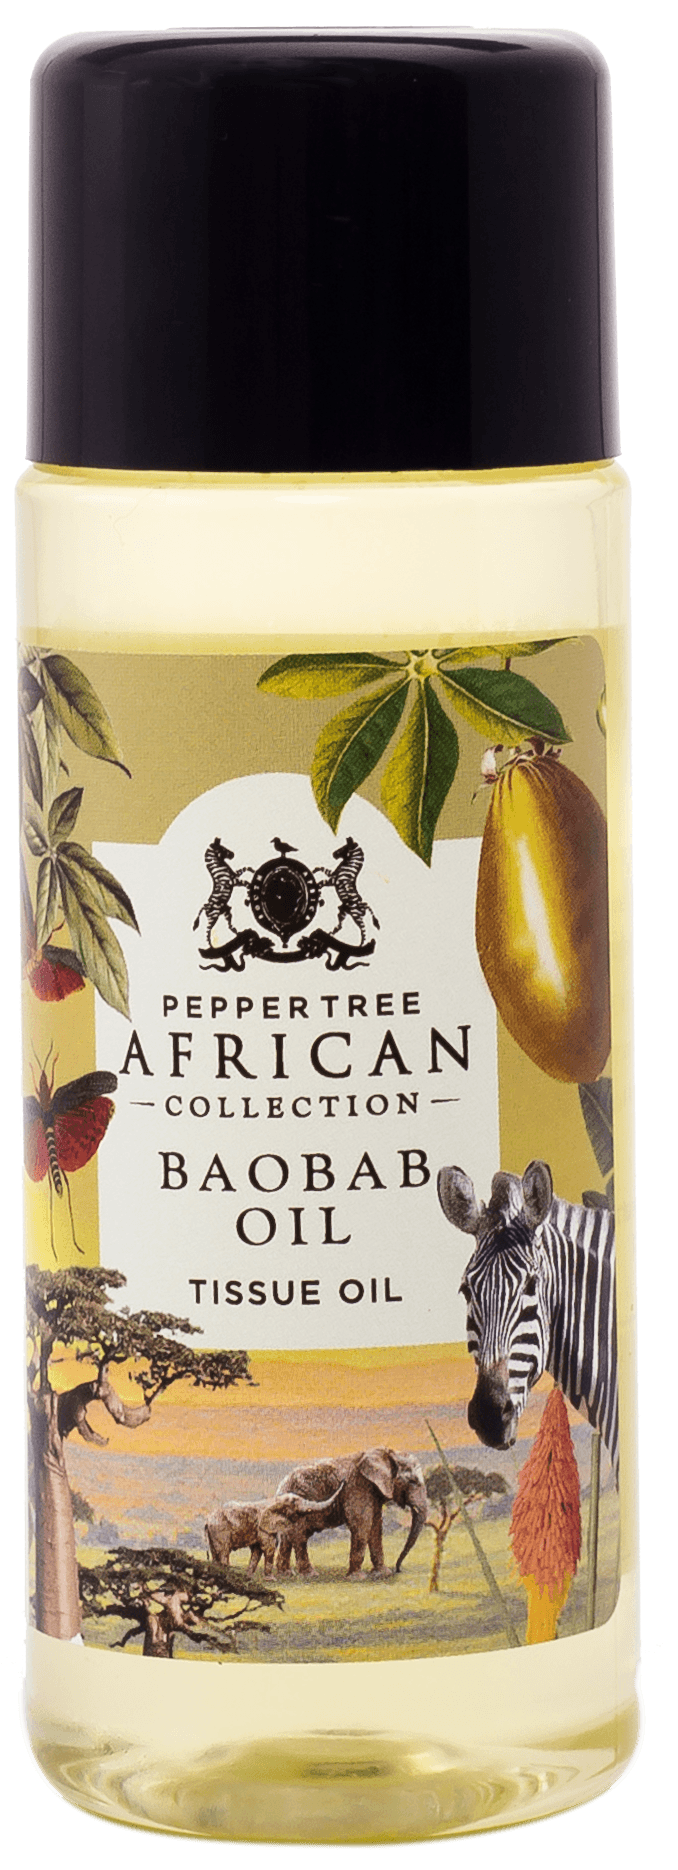 Baobab Tissue Oil - Shopping4Africa